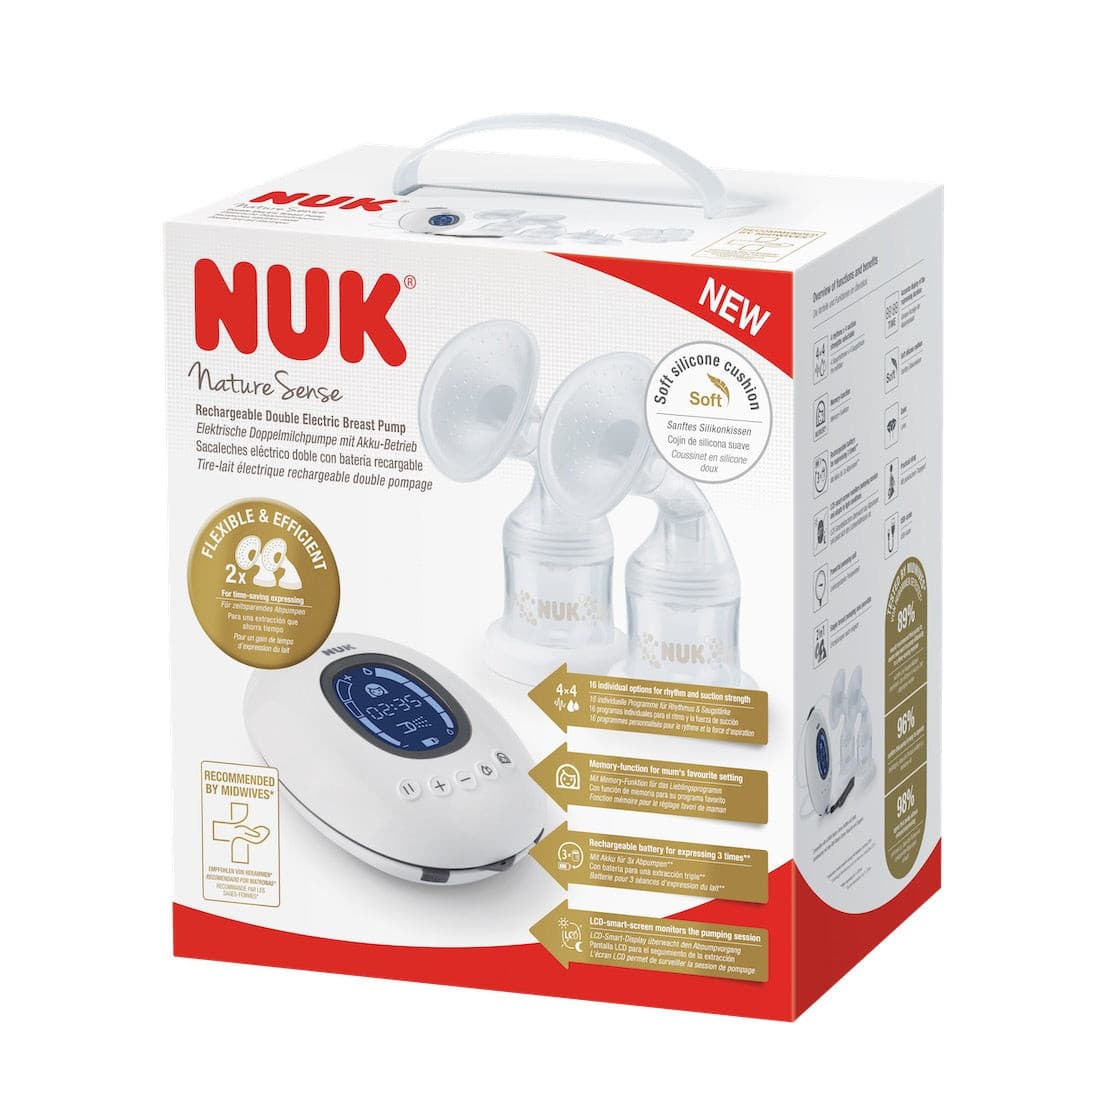 NUK Nature Sense Double Recharge Electric Breast Pump.